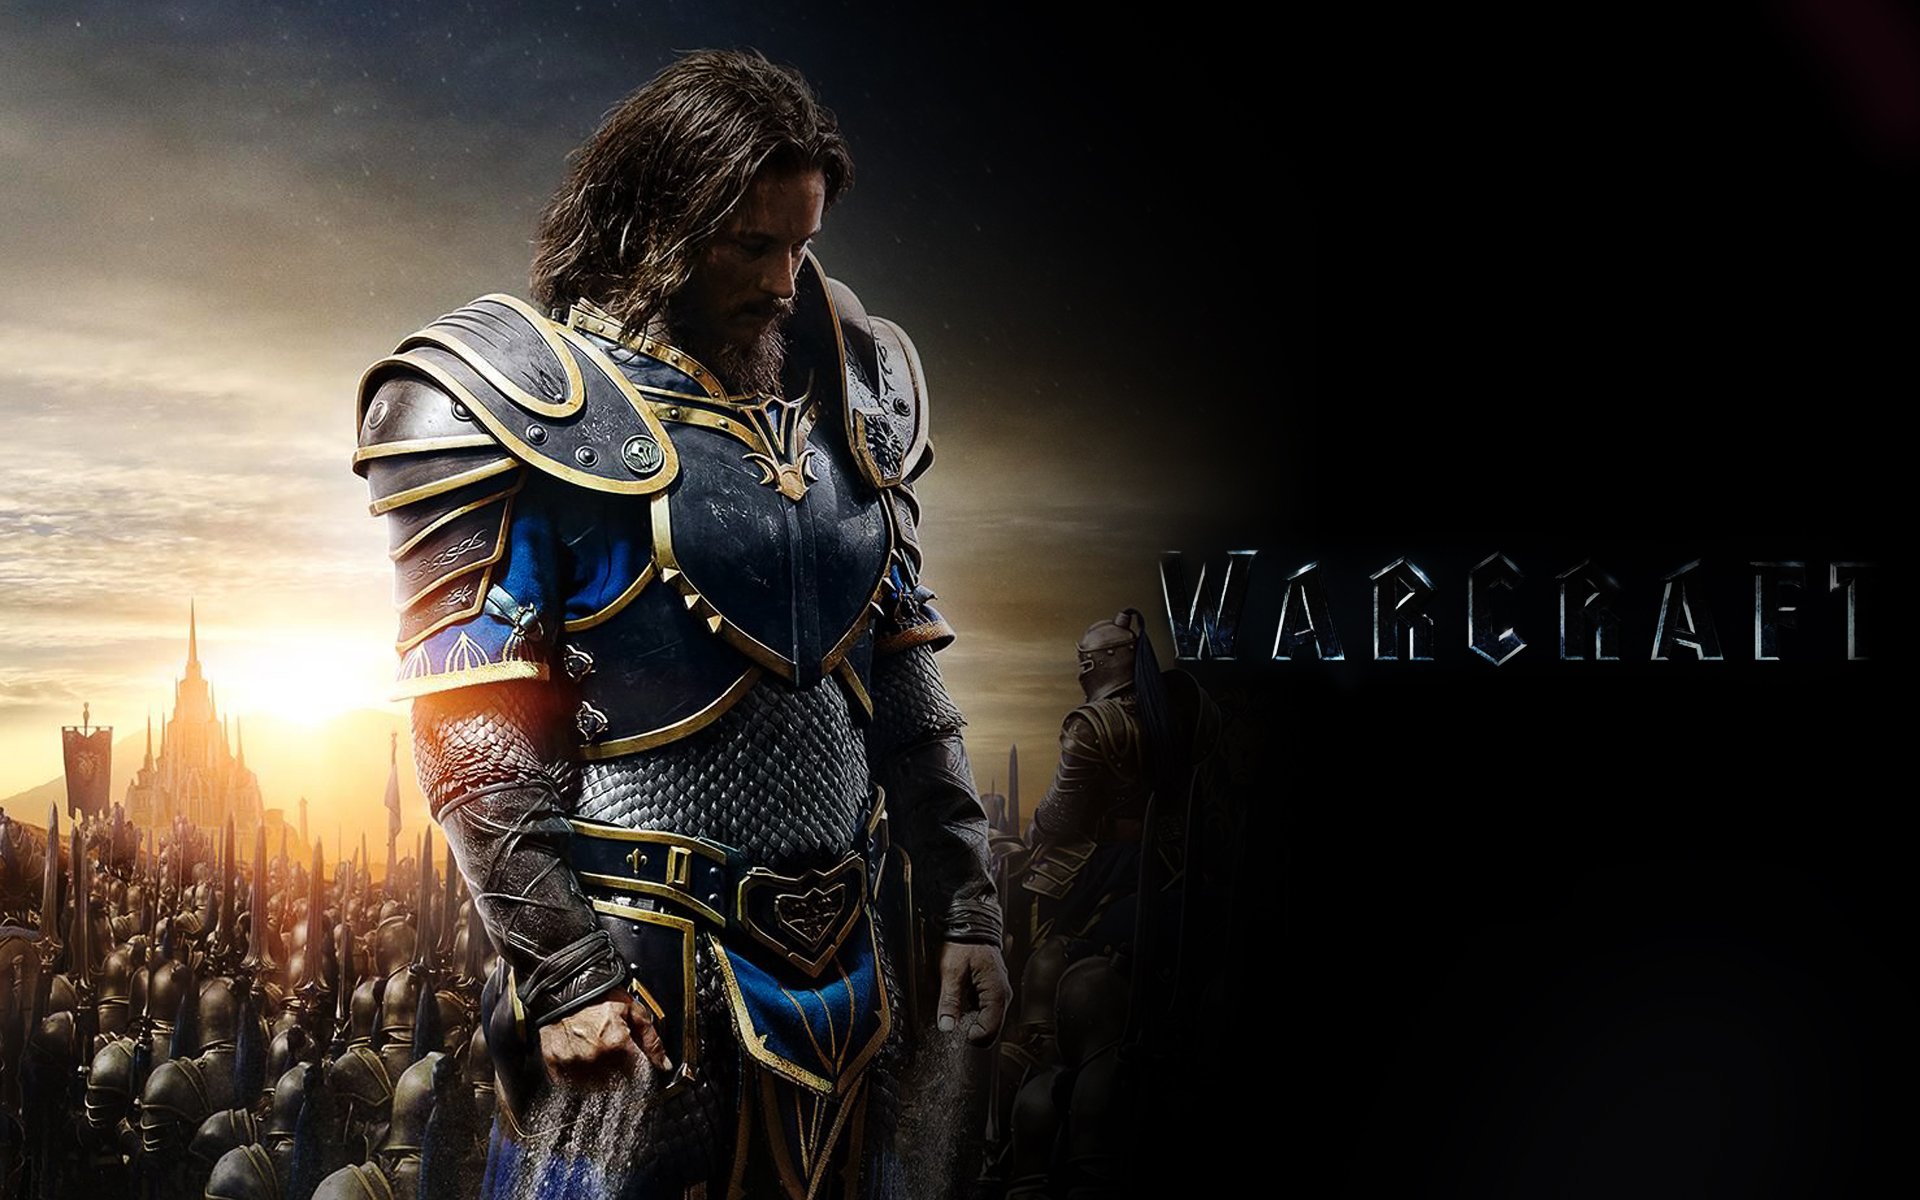 warcraft, Beginning, Fantasy, Action, Fighting, Warrior, Adventure, World, 1wcraft, Knight, Armor Wallpaper